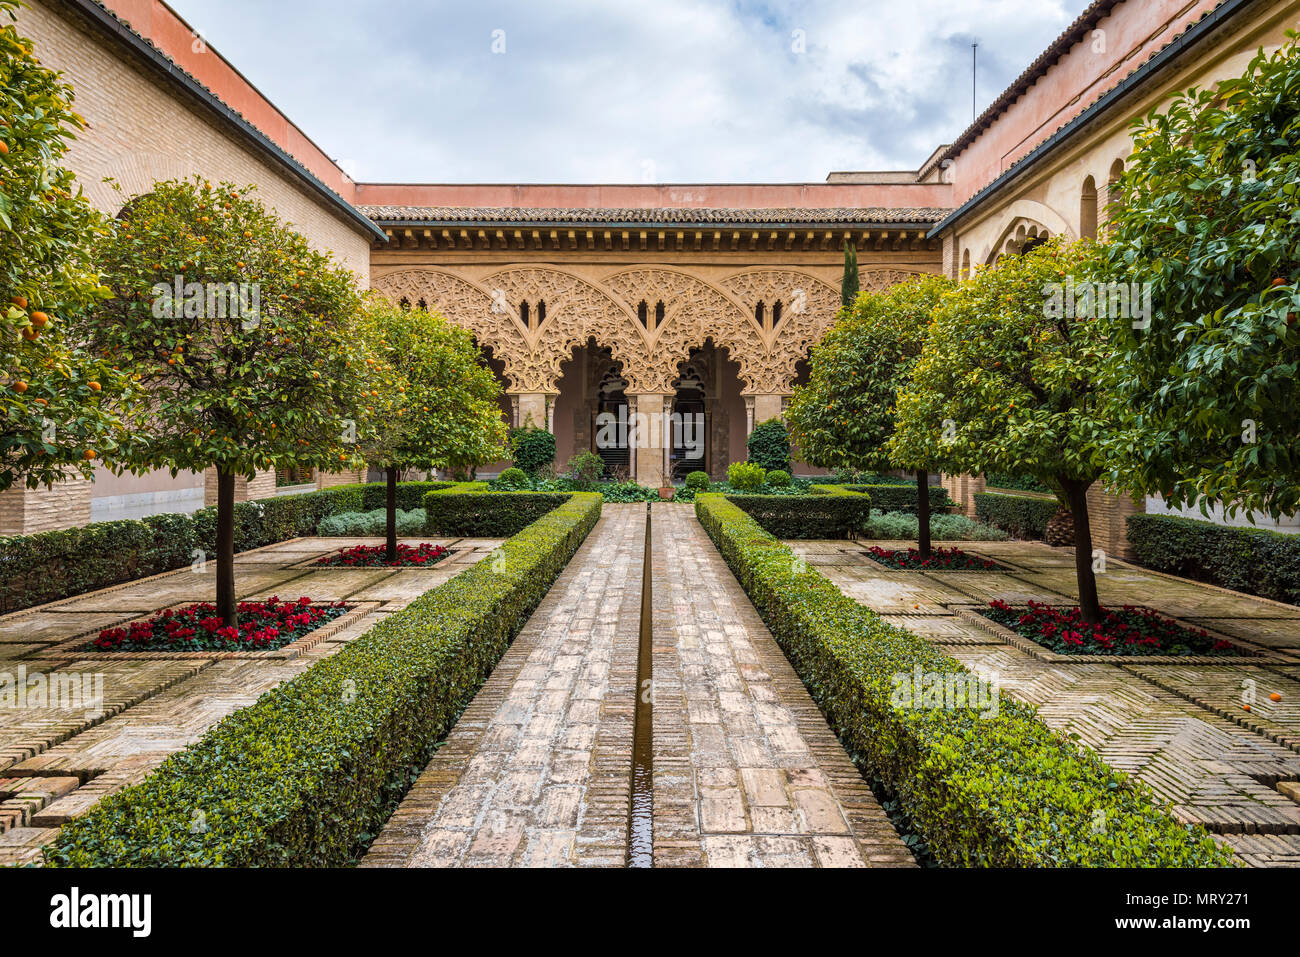 Patio of Saint Isabel, Aljaferia palace, Zaragoza, Aragon, Spain, Europe Stock Photo